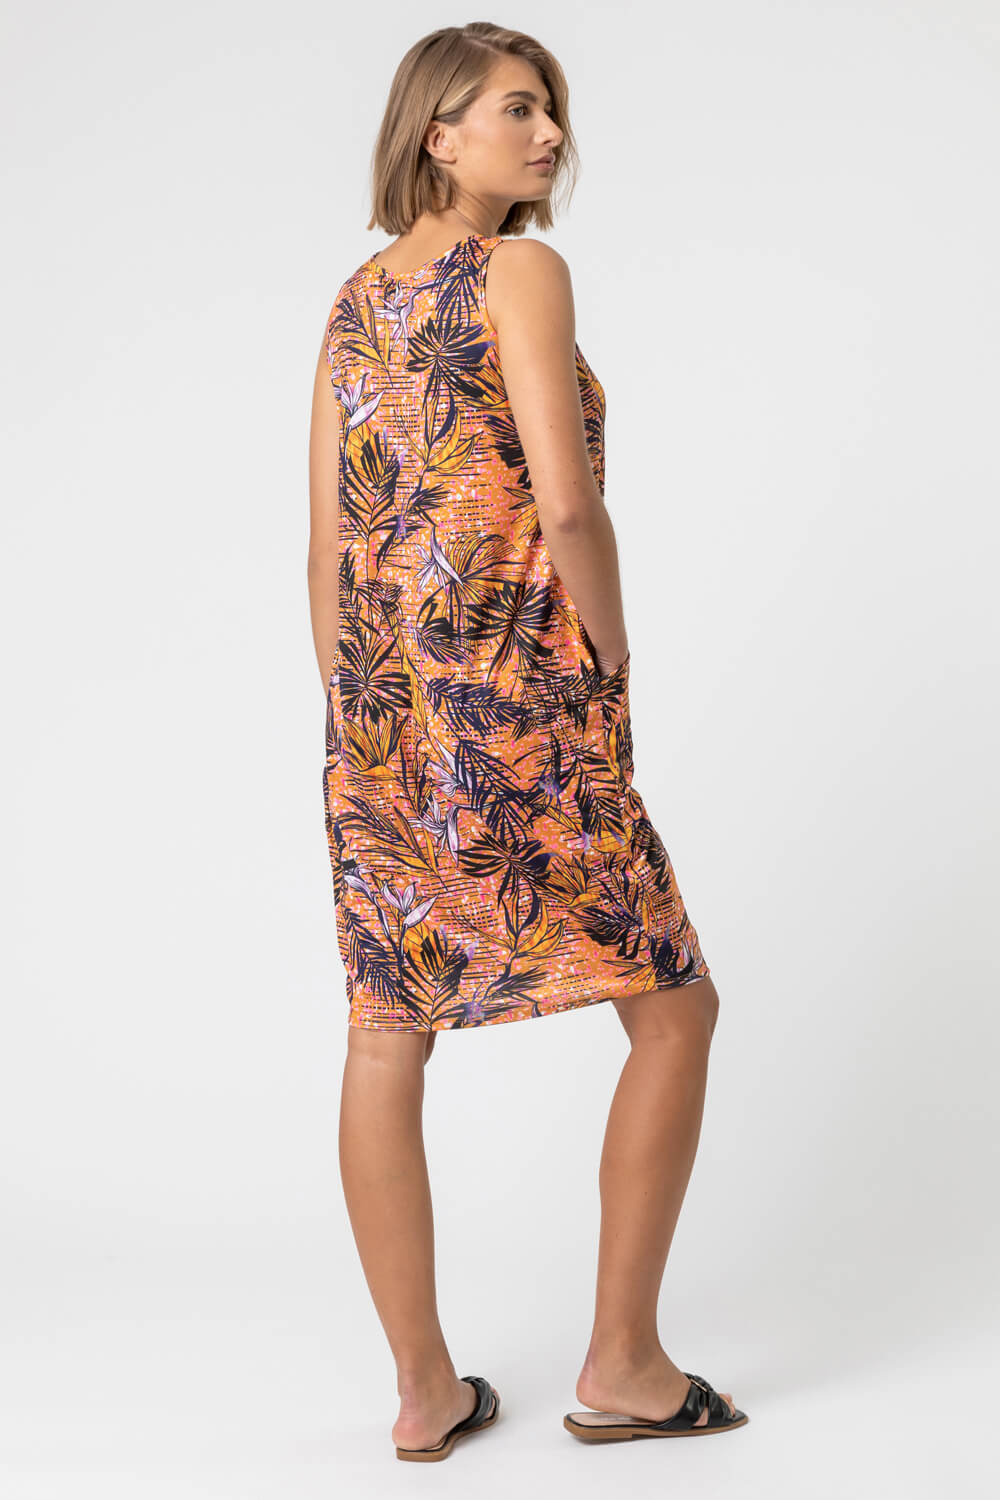 ORANGE Tropical Palm Print Slouch Pocket Dress, Image 2 of 4